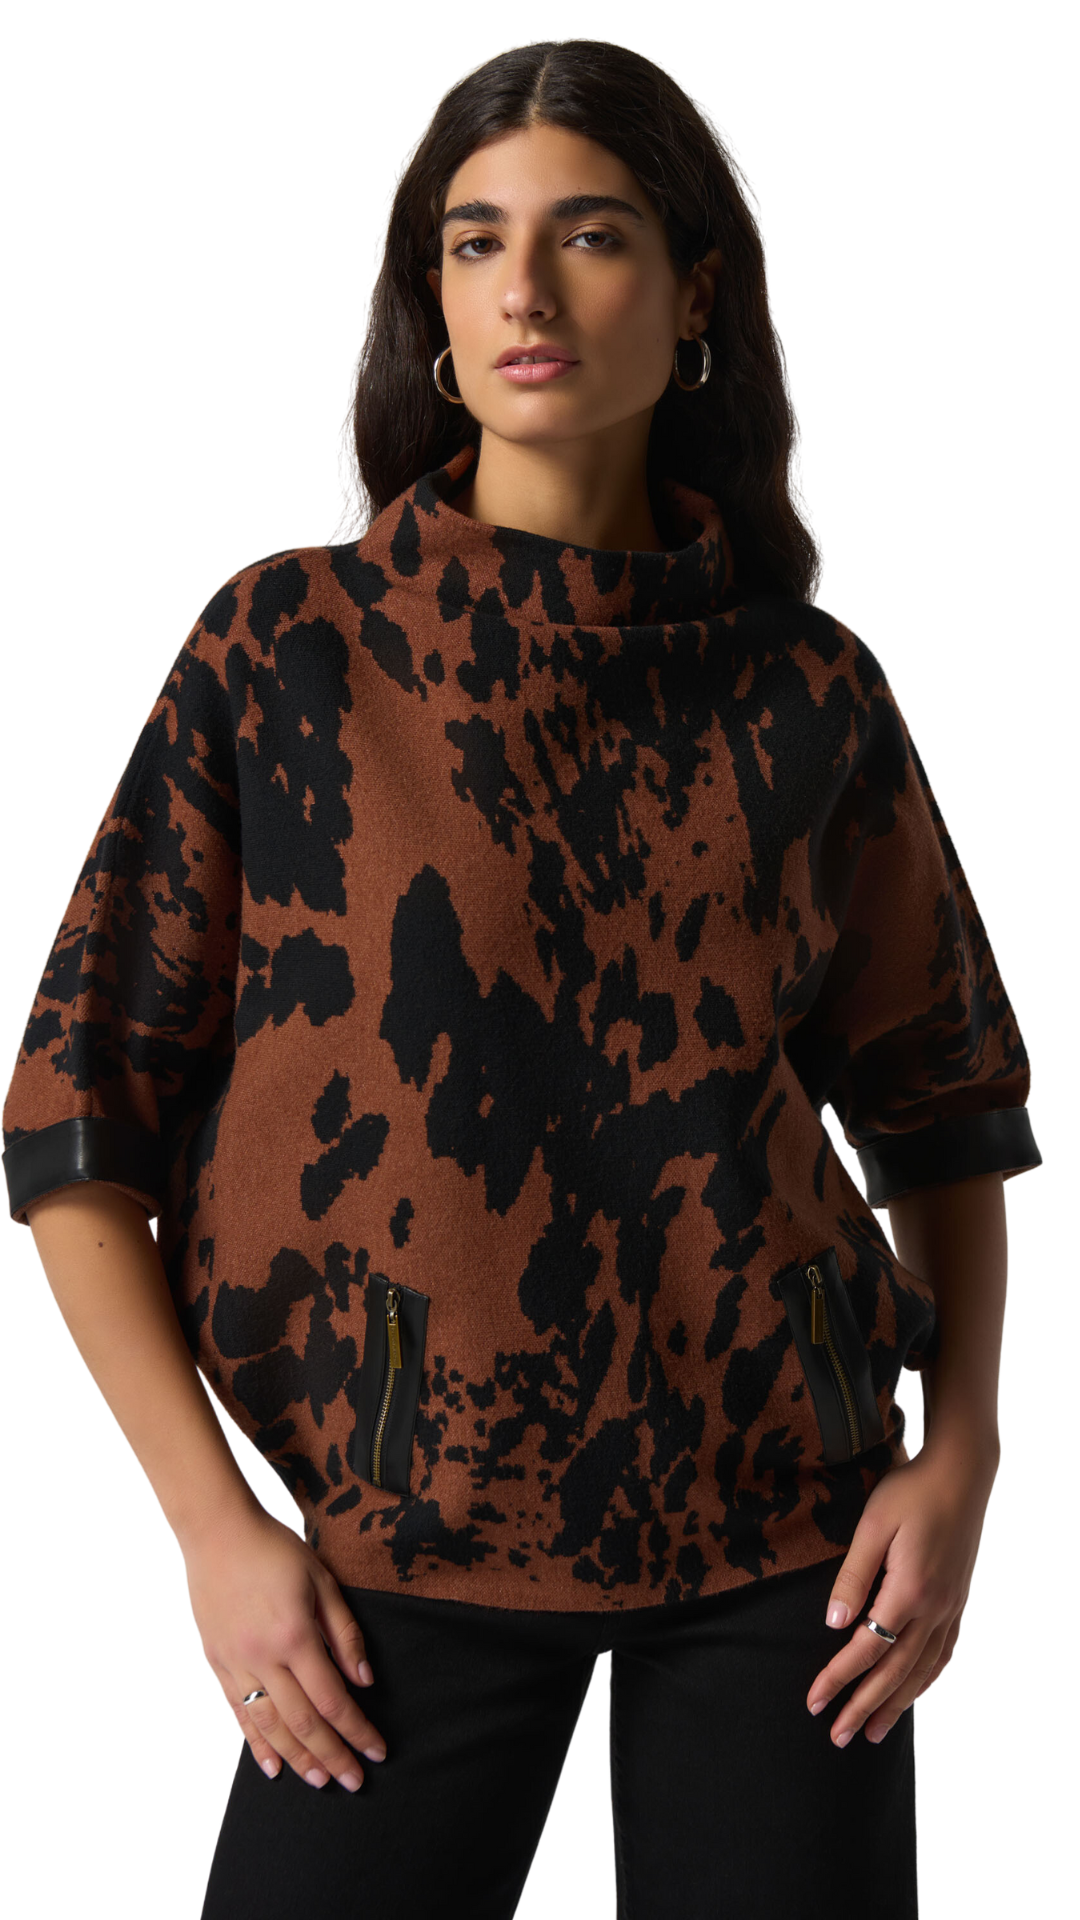 Animal Print Boxy Sweater in Toffee/Black or Avocado/Black. Style JR233948